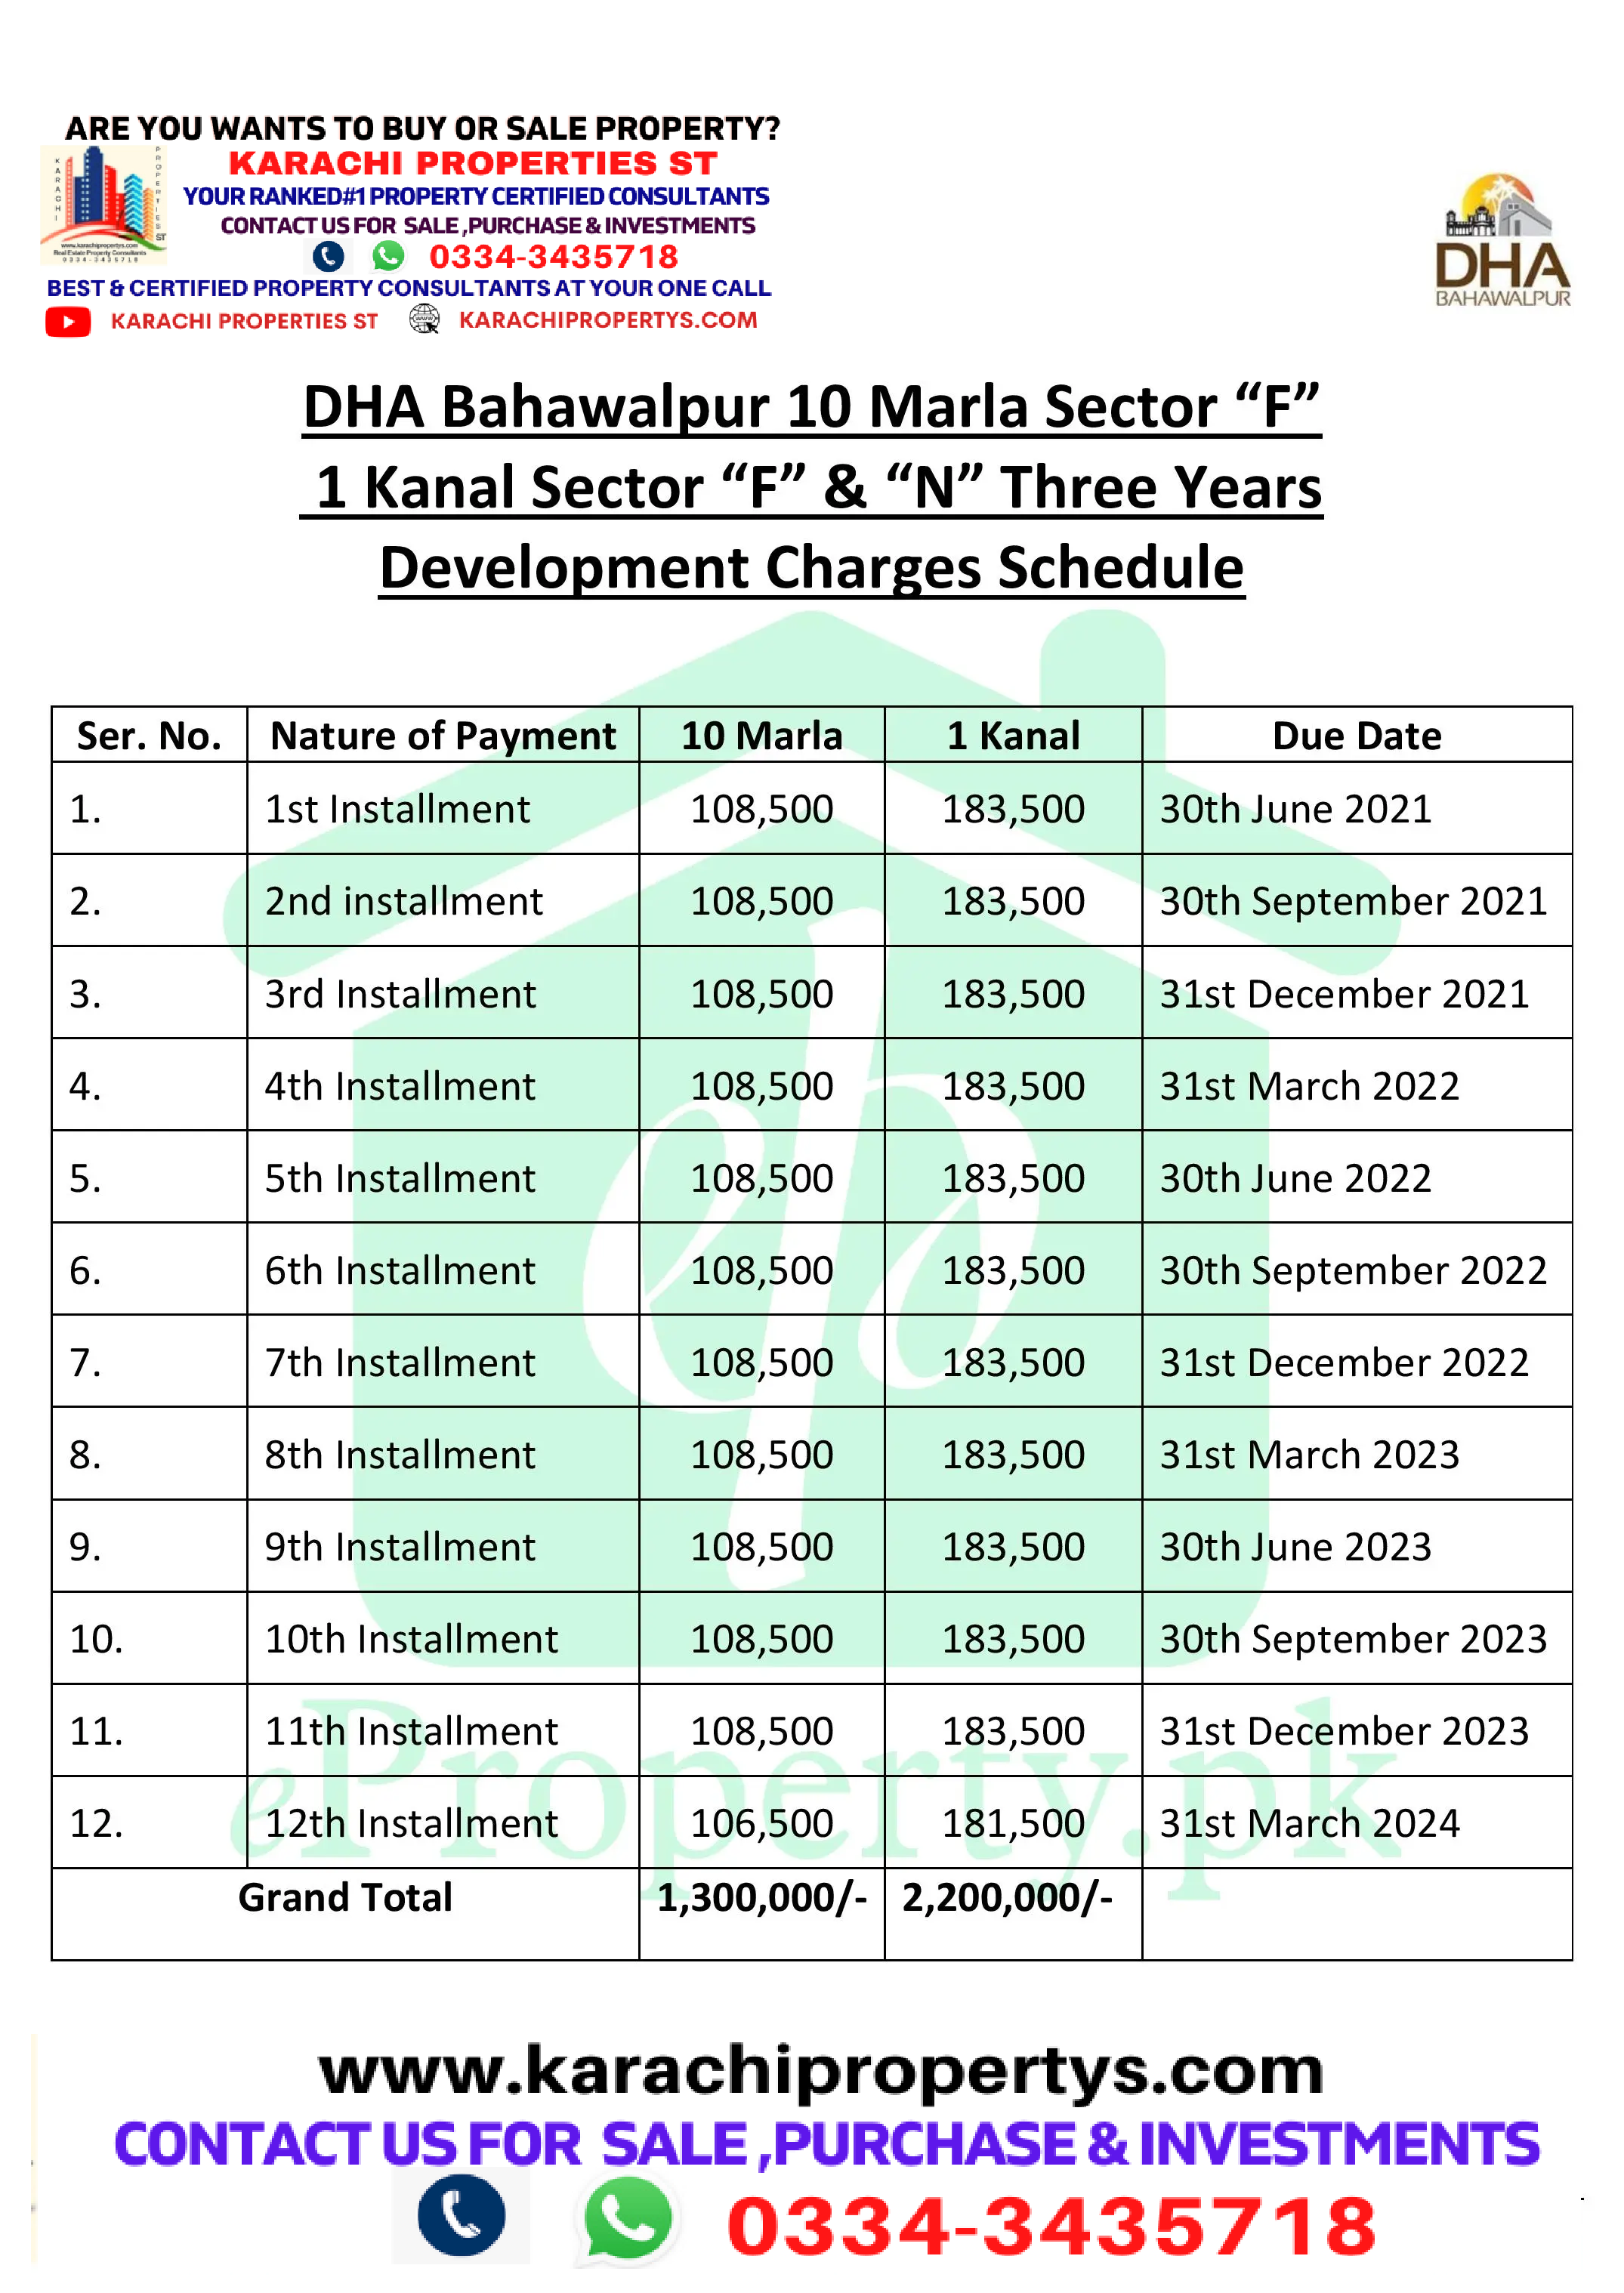 DHA BAHAWALPUR 10 MARLA 1 KANAL THREE YEARS DEVELOPMENT CHARGES SCHEDULE LATEST NEW